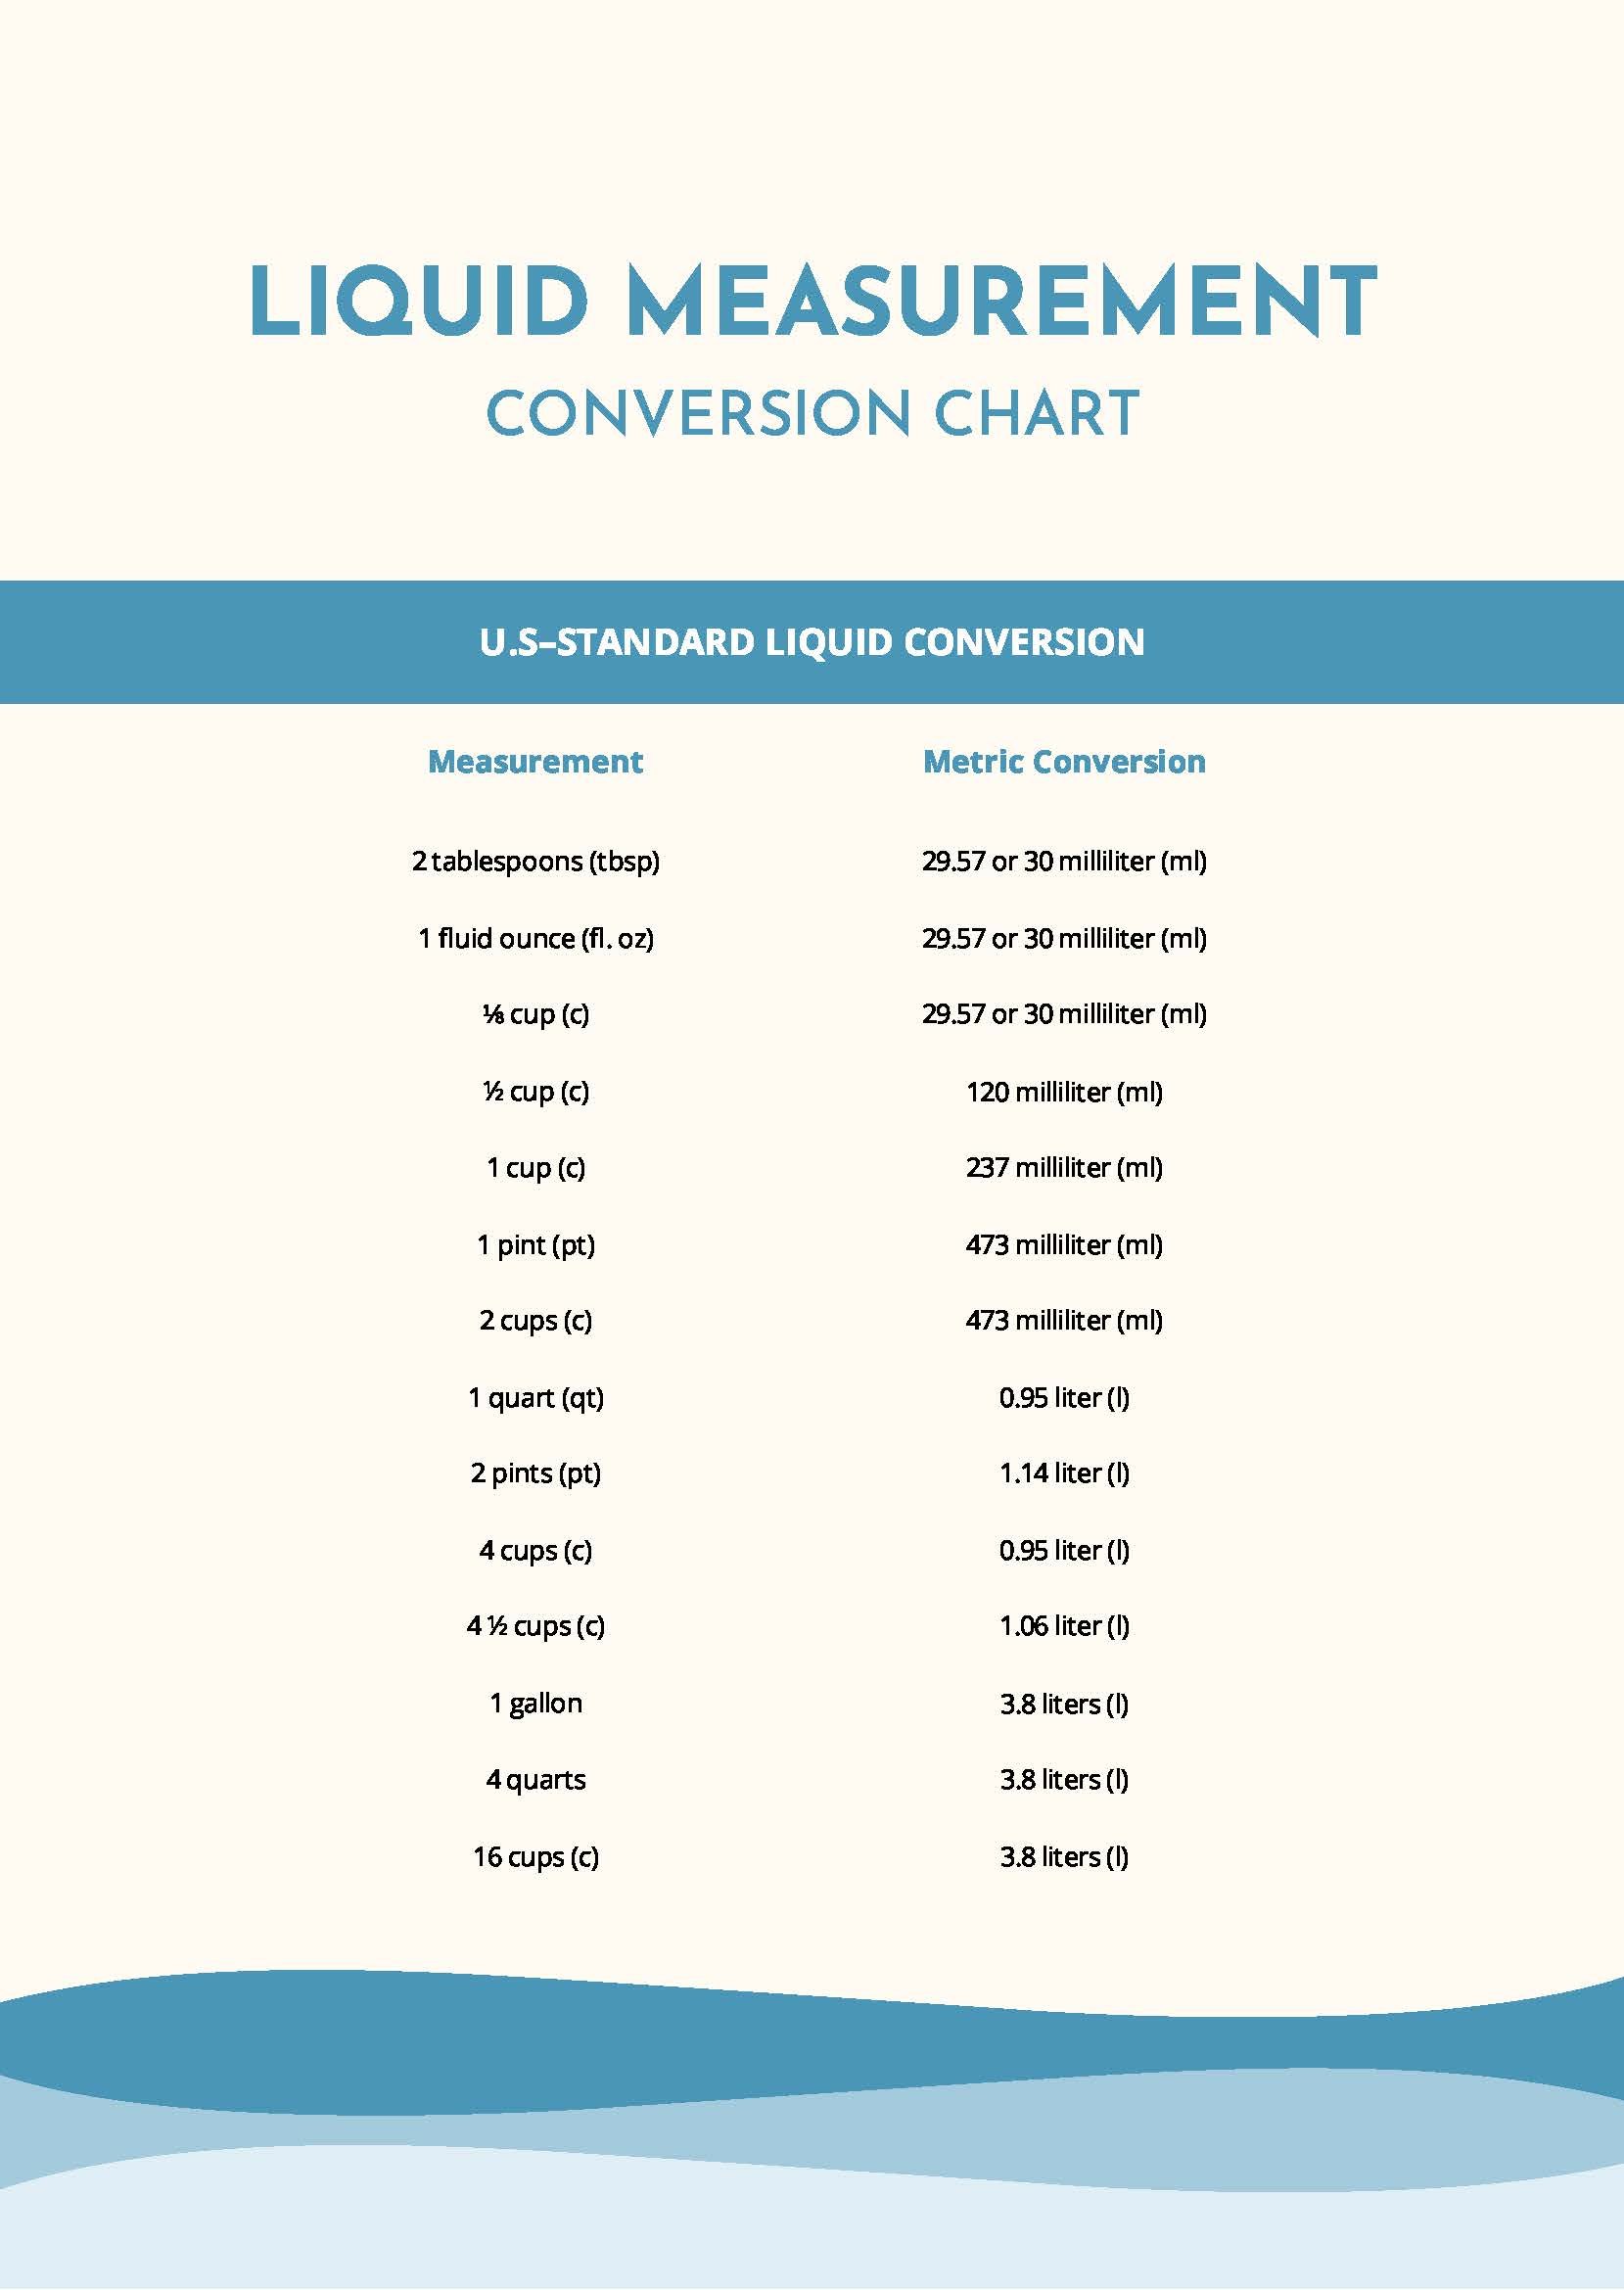 Liquid Measurement Conversion Chart in PDF